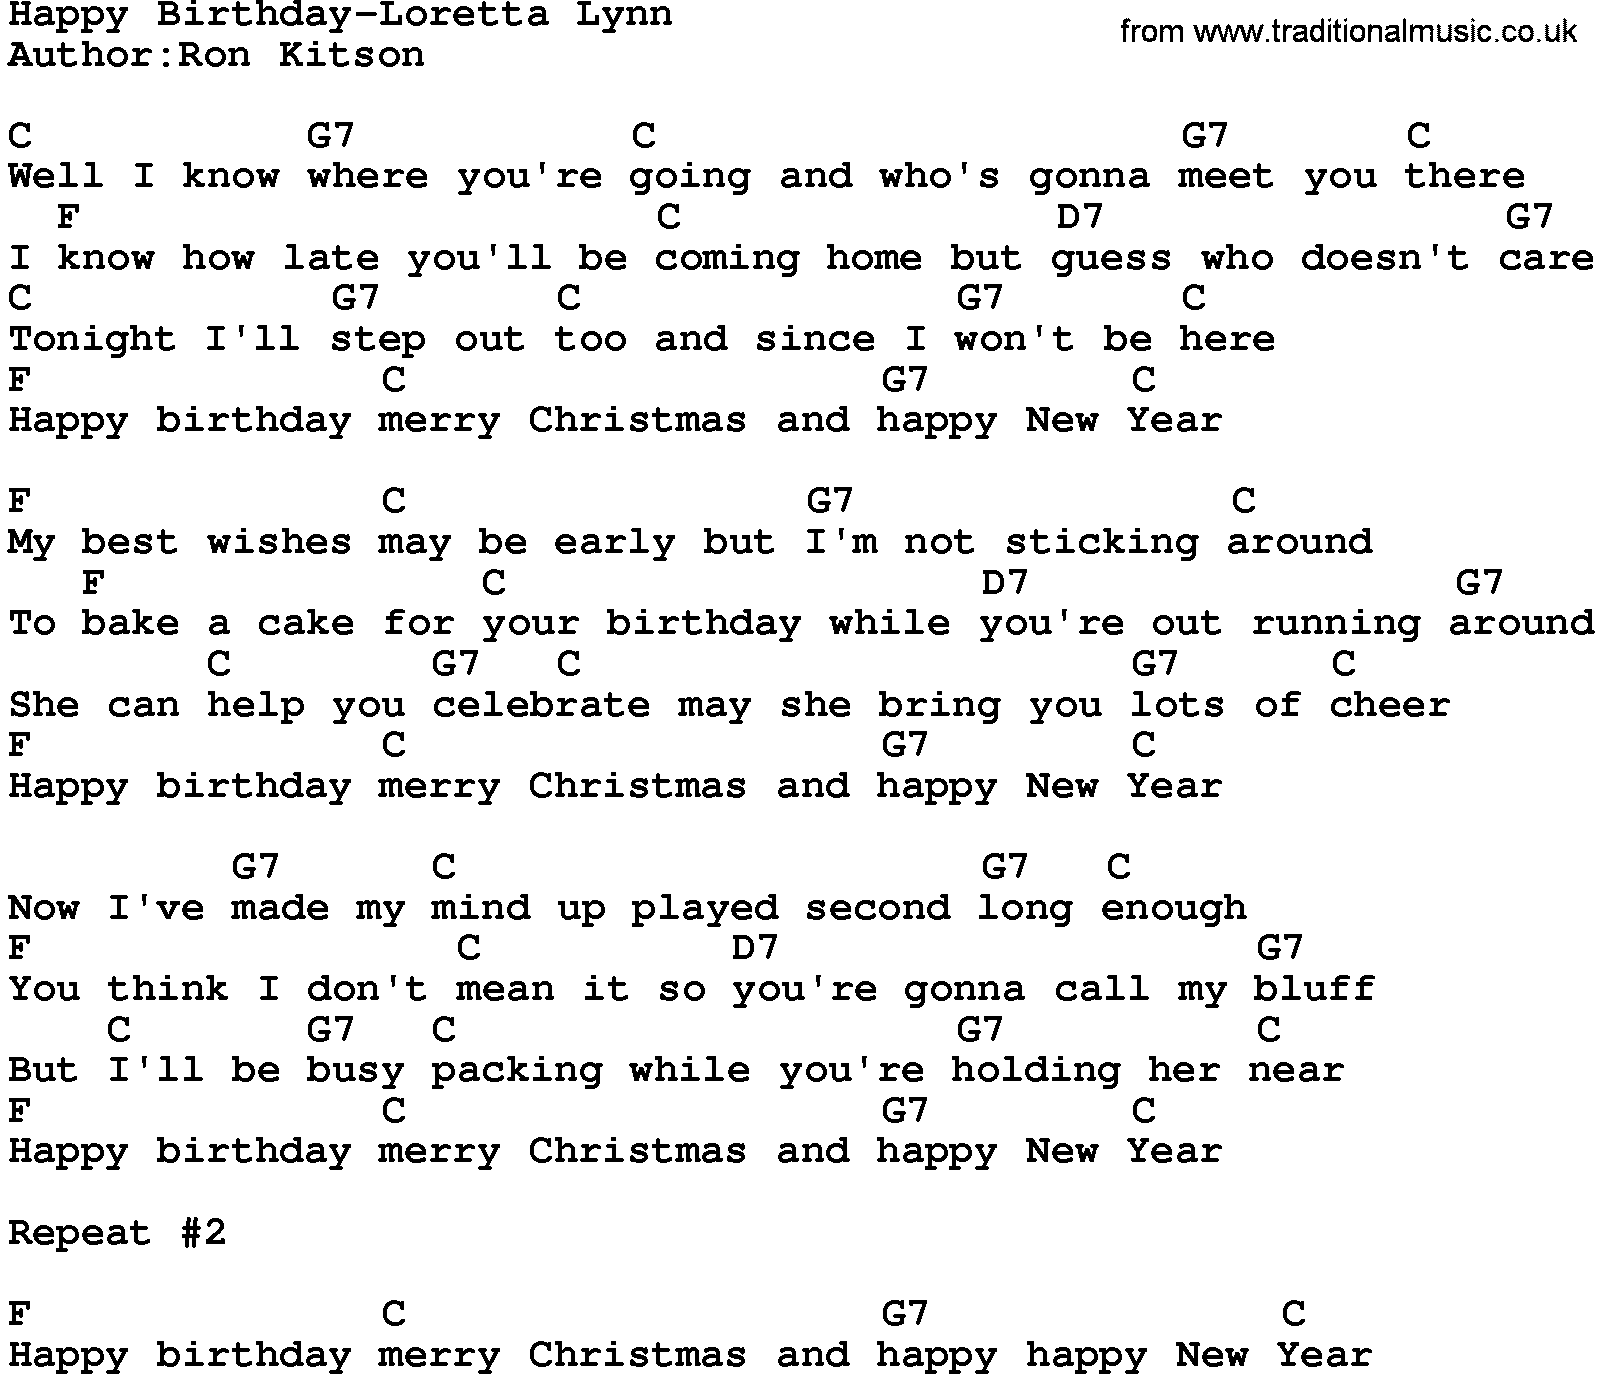 Country music song: Happy Birthday-Loretta Lynn lyrics and chords